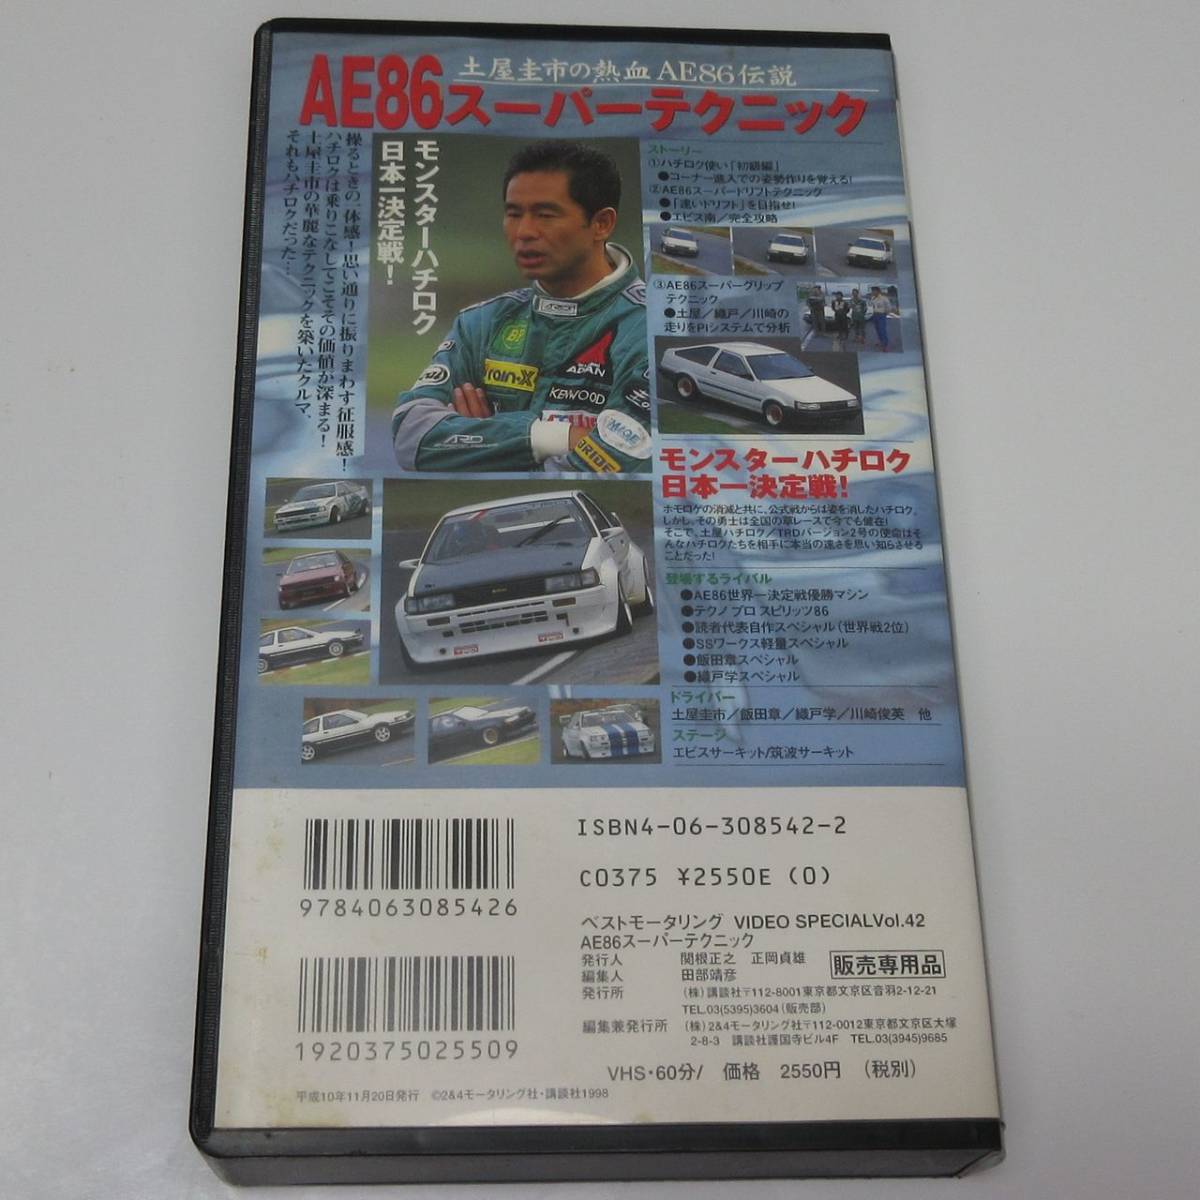 .. фирма VHS видео soft Best Motoring VIDEO SPECIAL Vol.42 AE86 super technique [ включая доставку ]